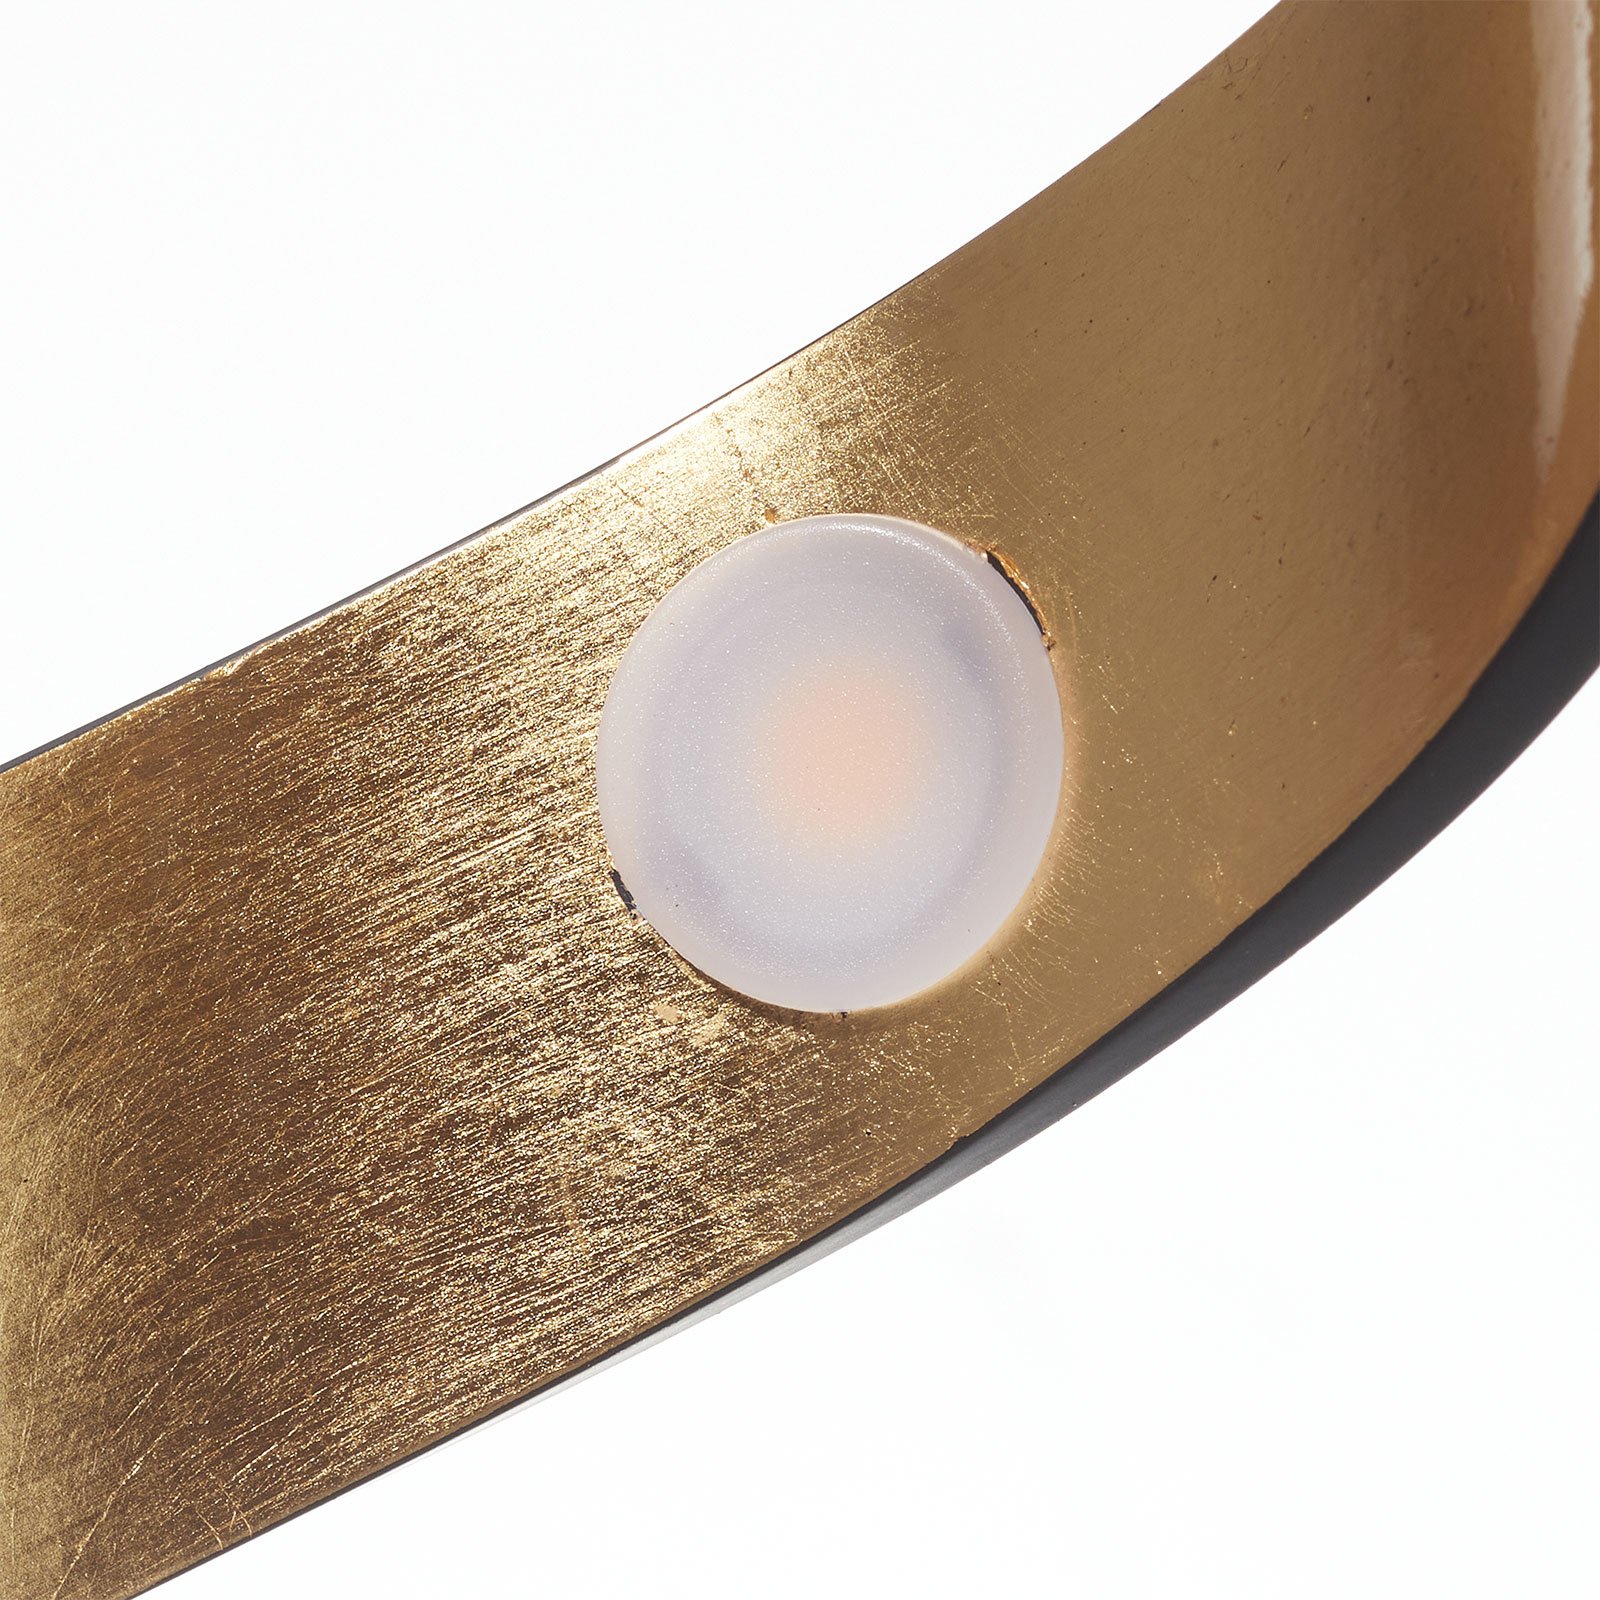 Stropné LED svietidlo Helx v čierno-zlatej